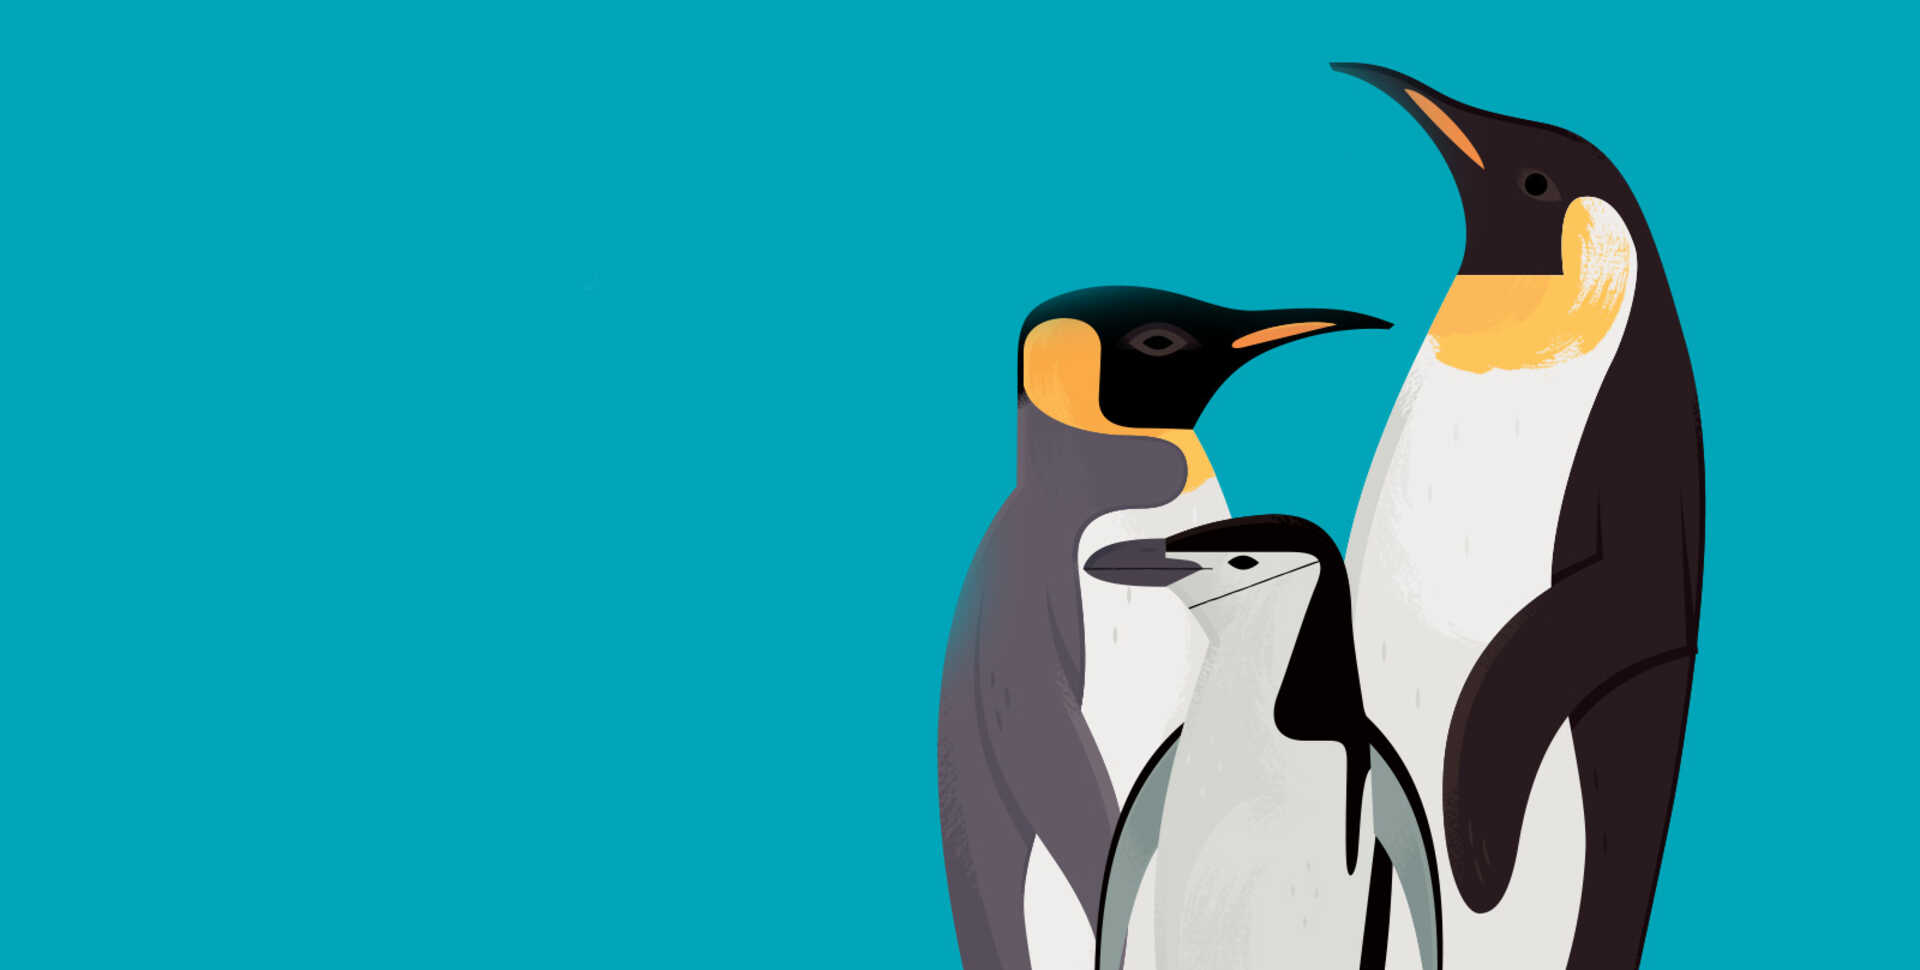 Illustration of 3 penguin species against a teal background